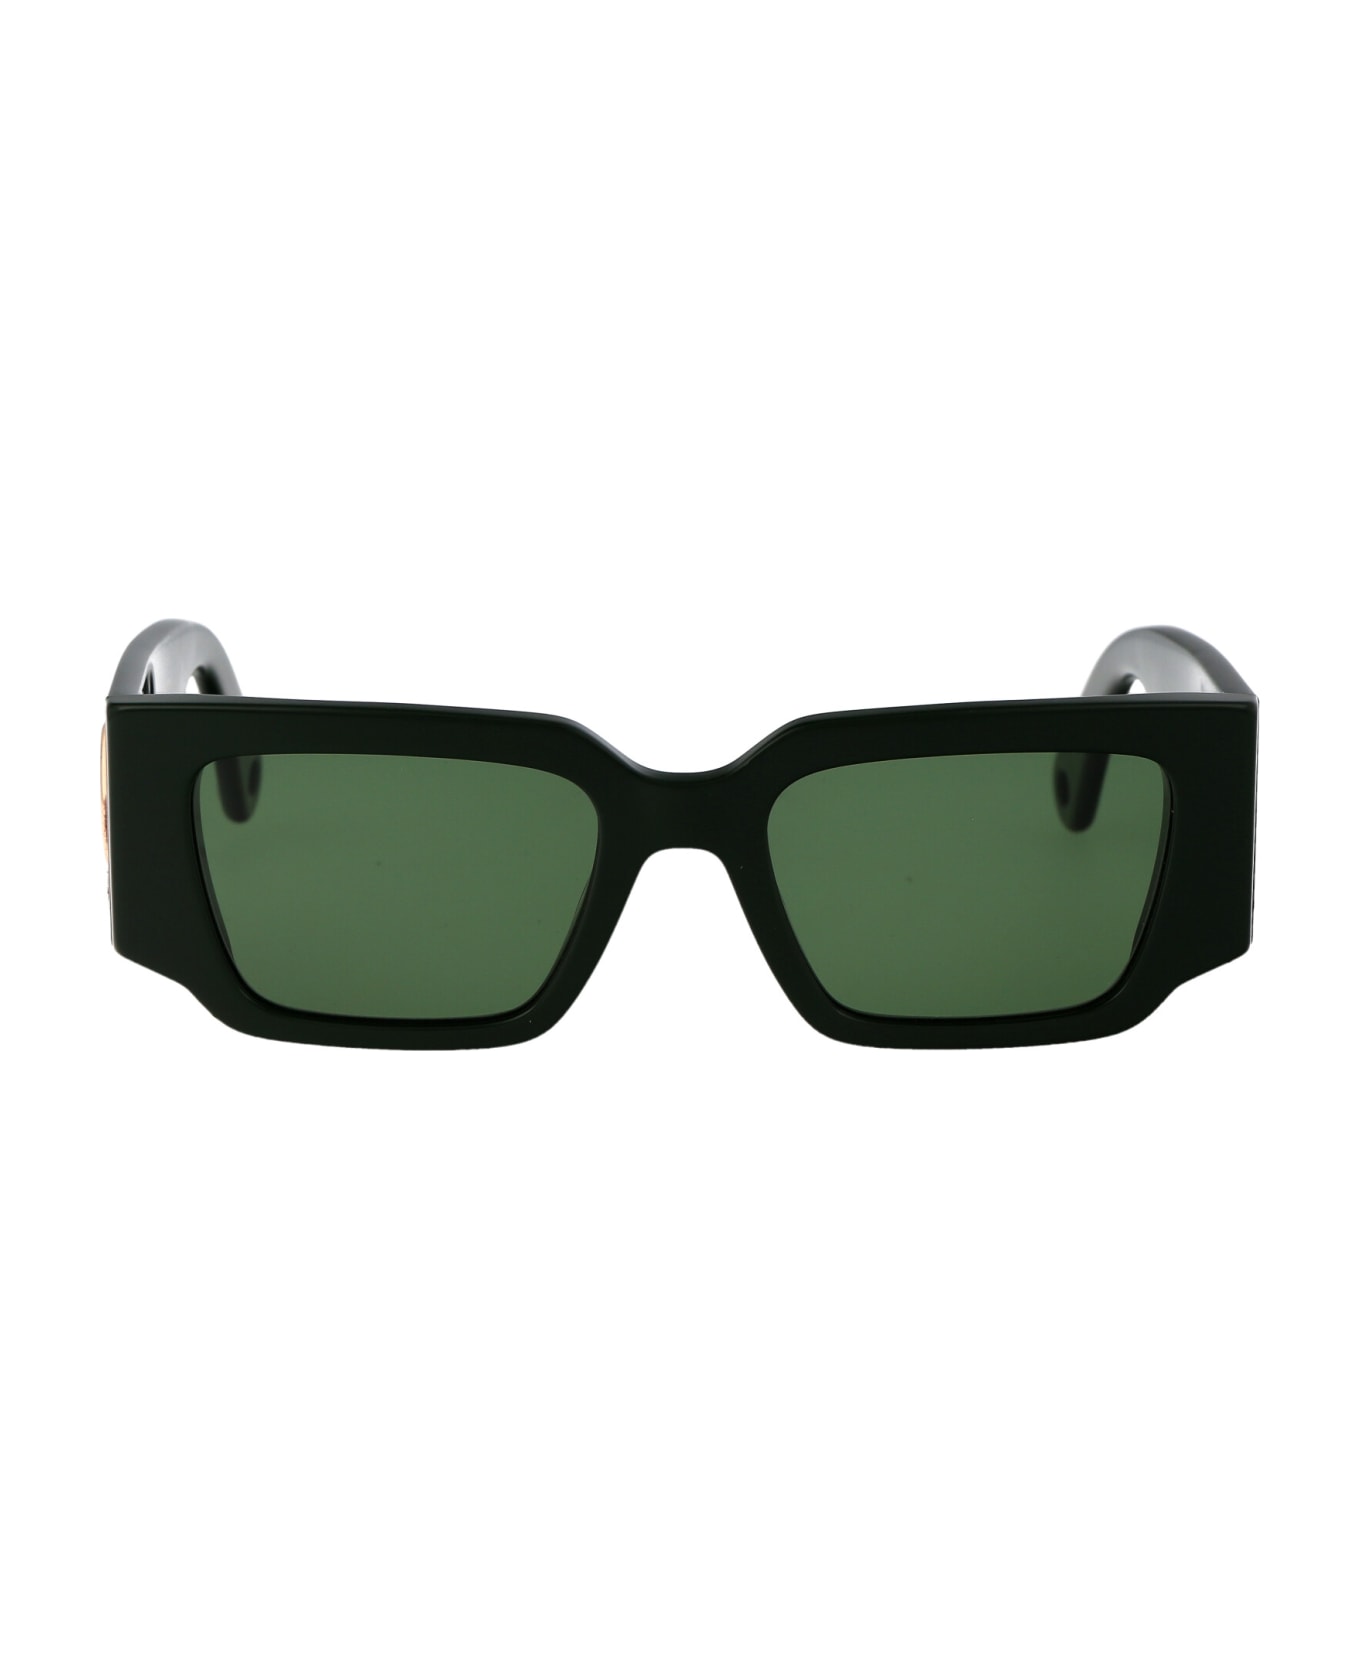 Lanvin Lnv639s Sunglasses - 318 DARK GREEN